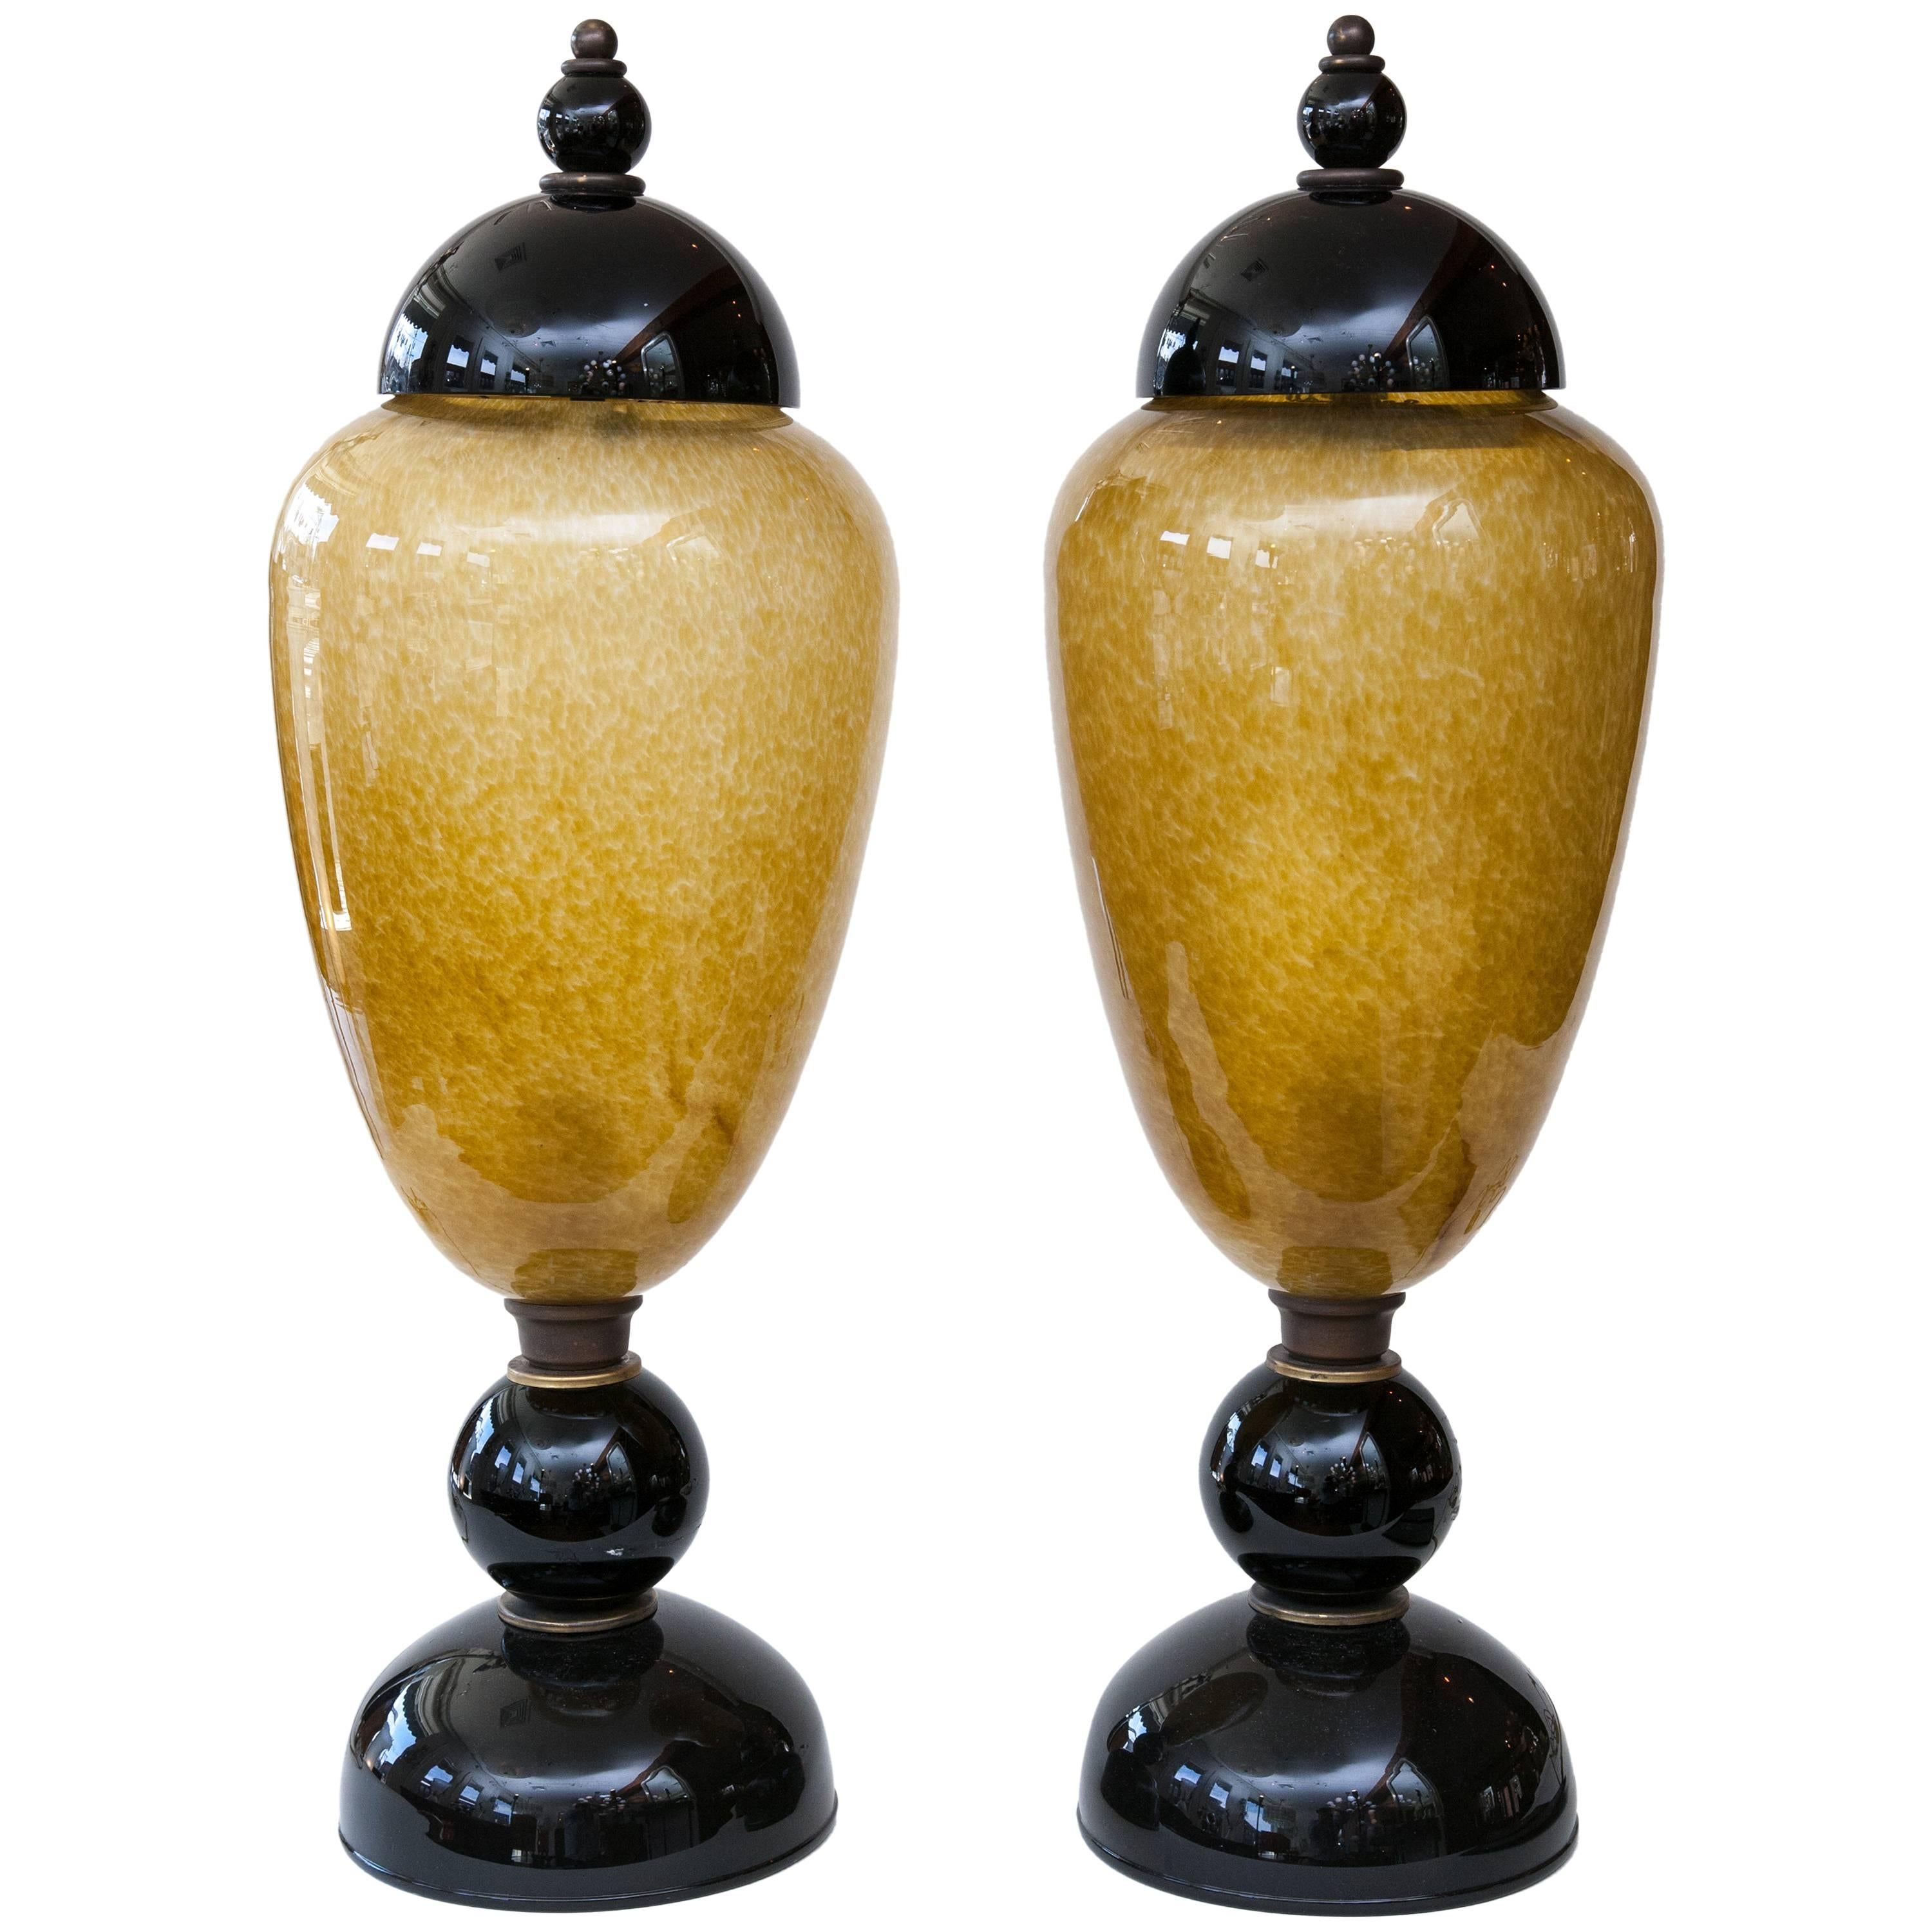 Pair of Rare Vintage Lit Covered Vases